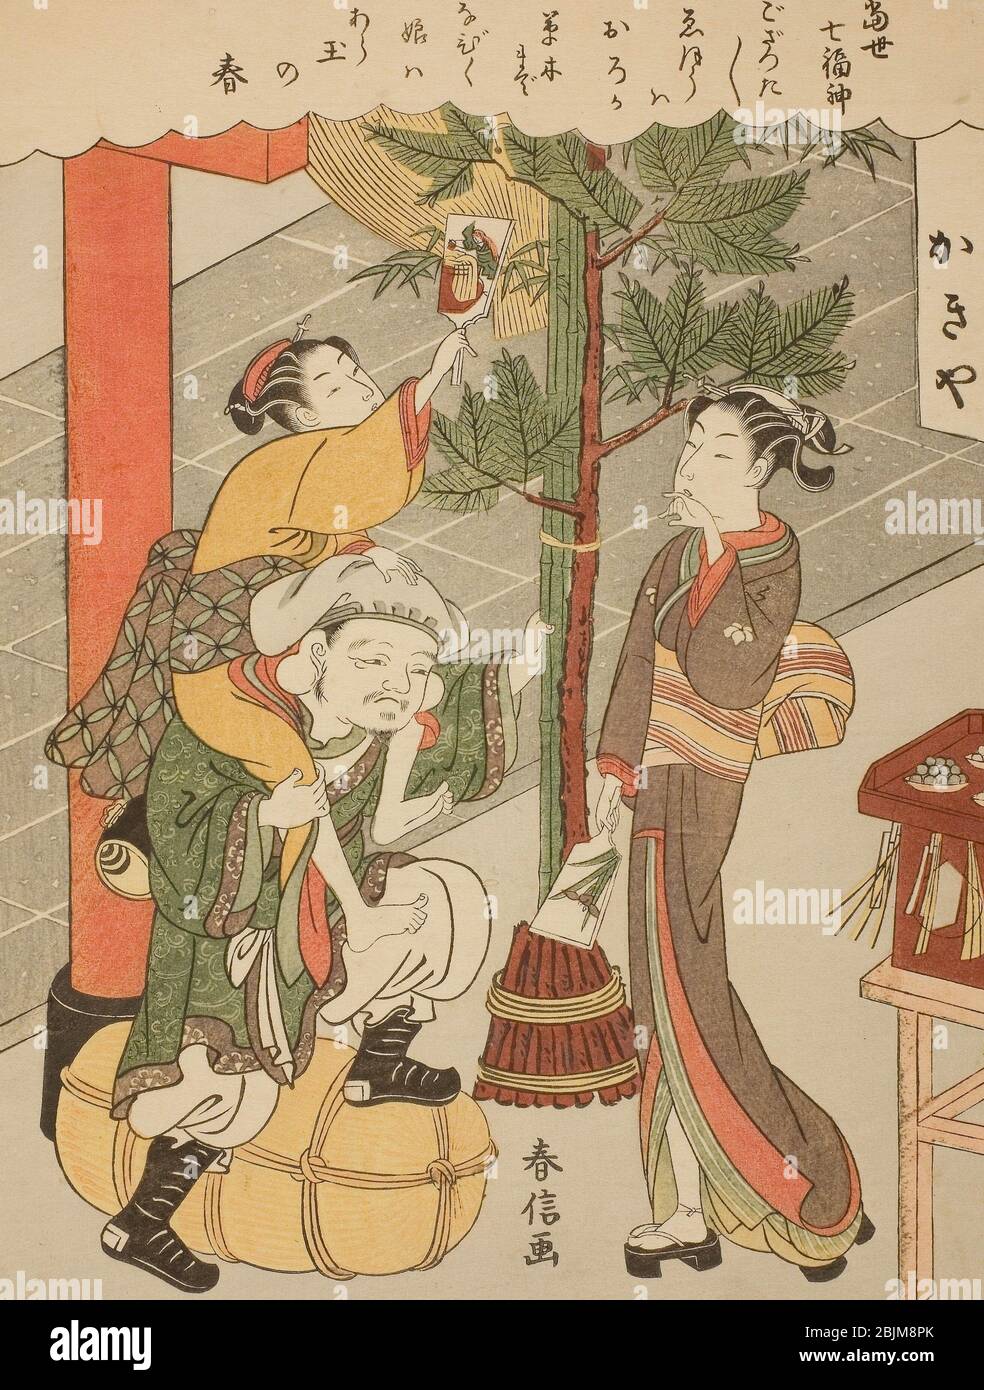 Author: Suzuki Harunobu. Daikokuten, from the series 'The Seven Gods of Good Luck in Modern Life (Tosei Shichi Fukujin)' - c. 1769 - Suzuki Harunobu Stock Photo